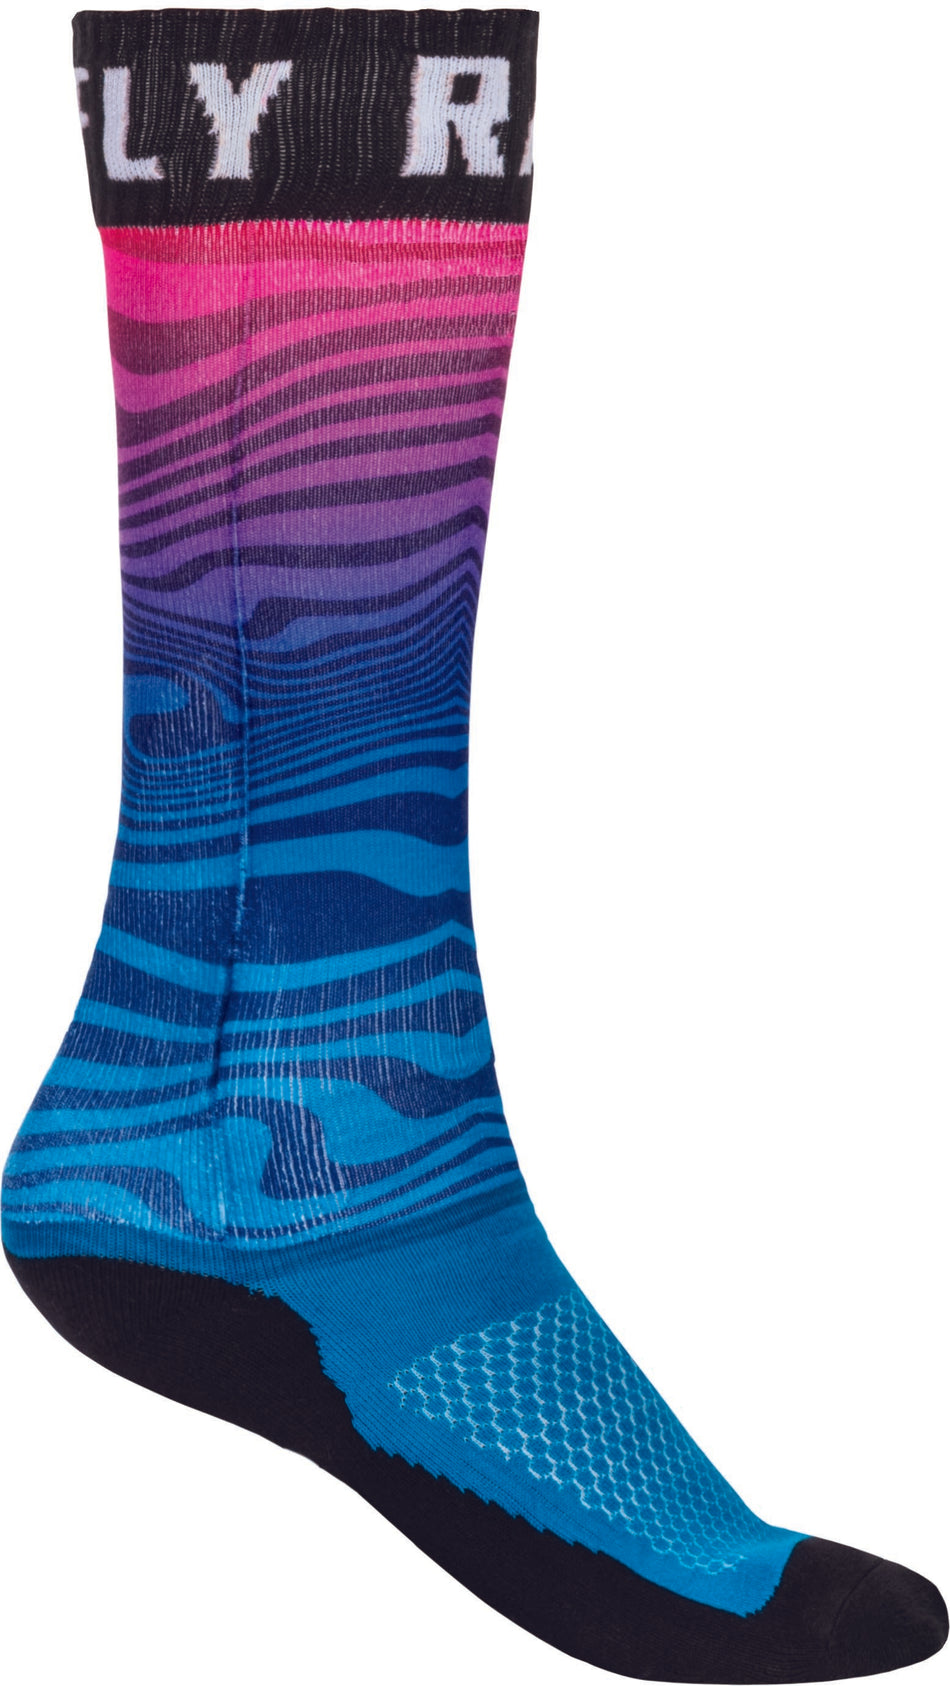 FLY RACING Mx Pro Sock Thin Blue/Pink/Black Lg/Xl 350-0520L